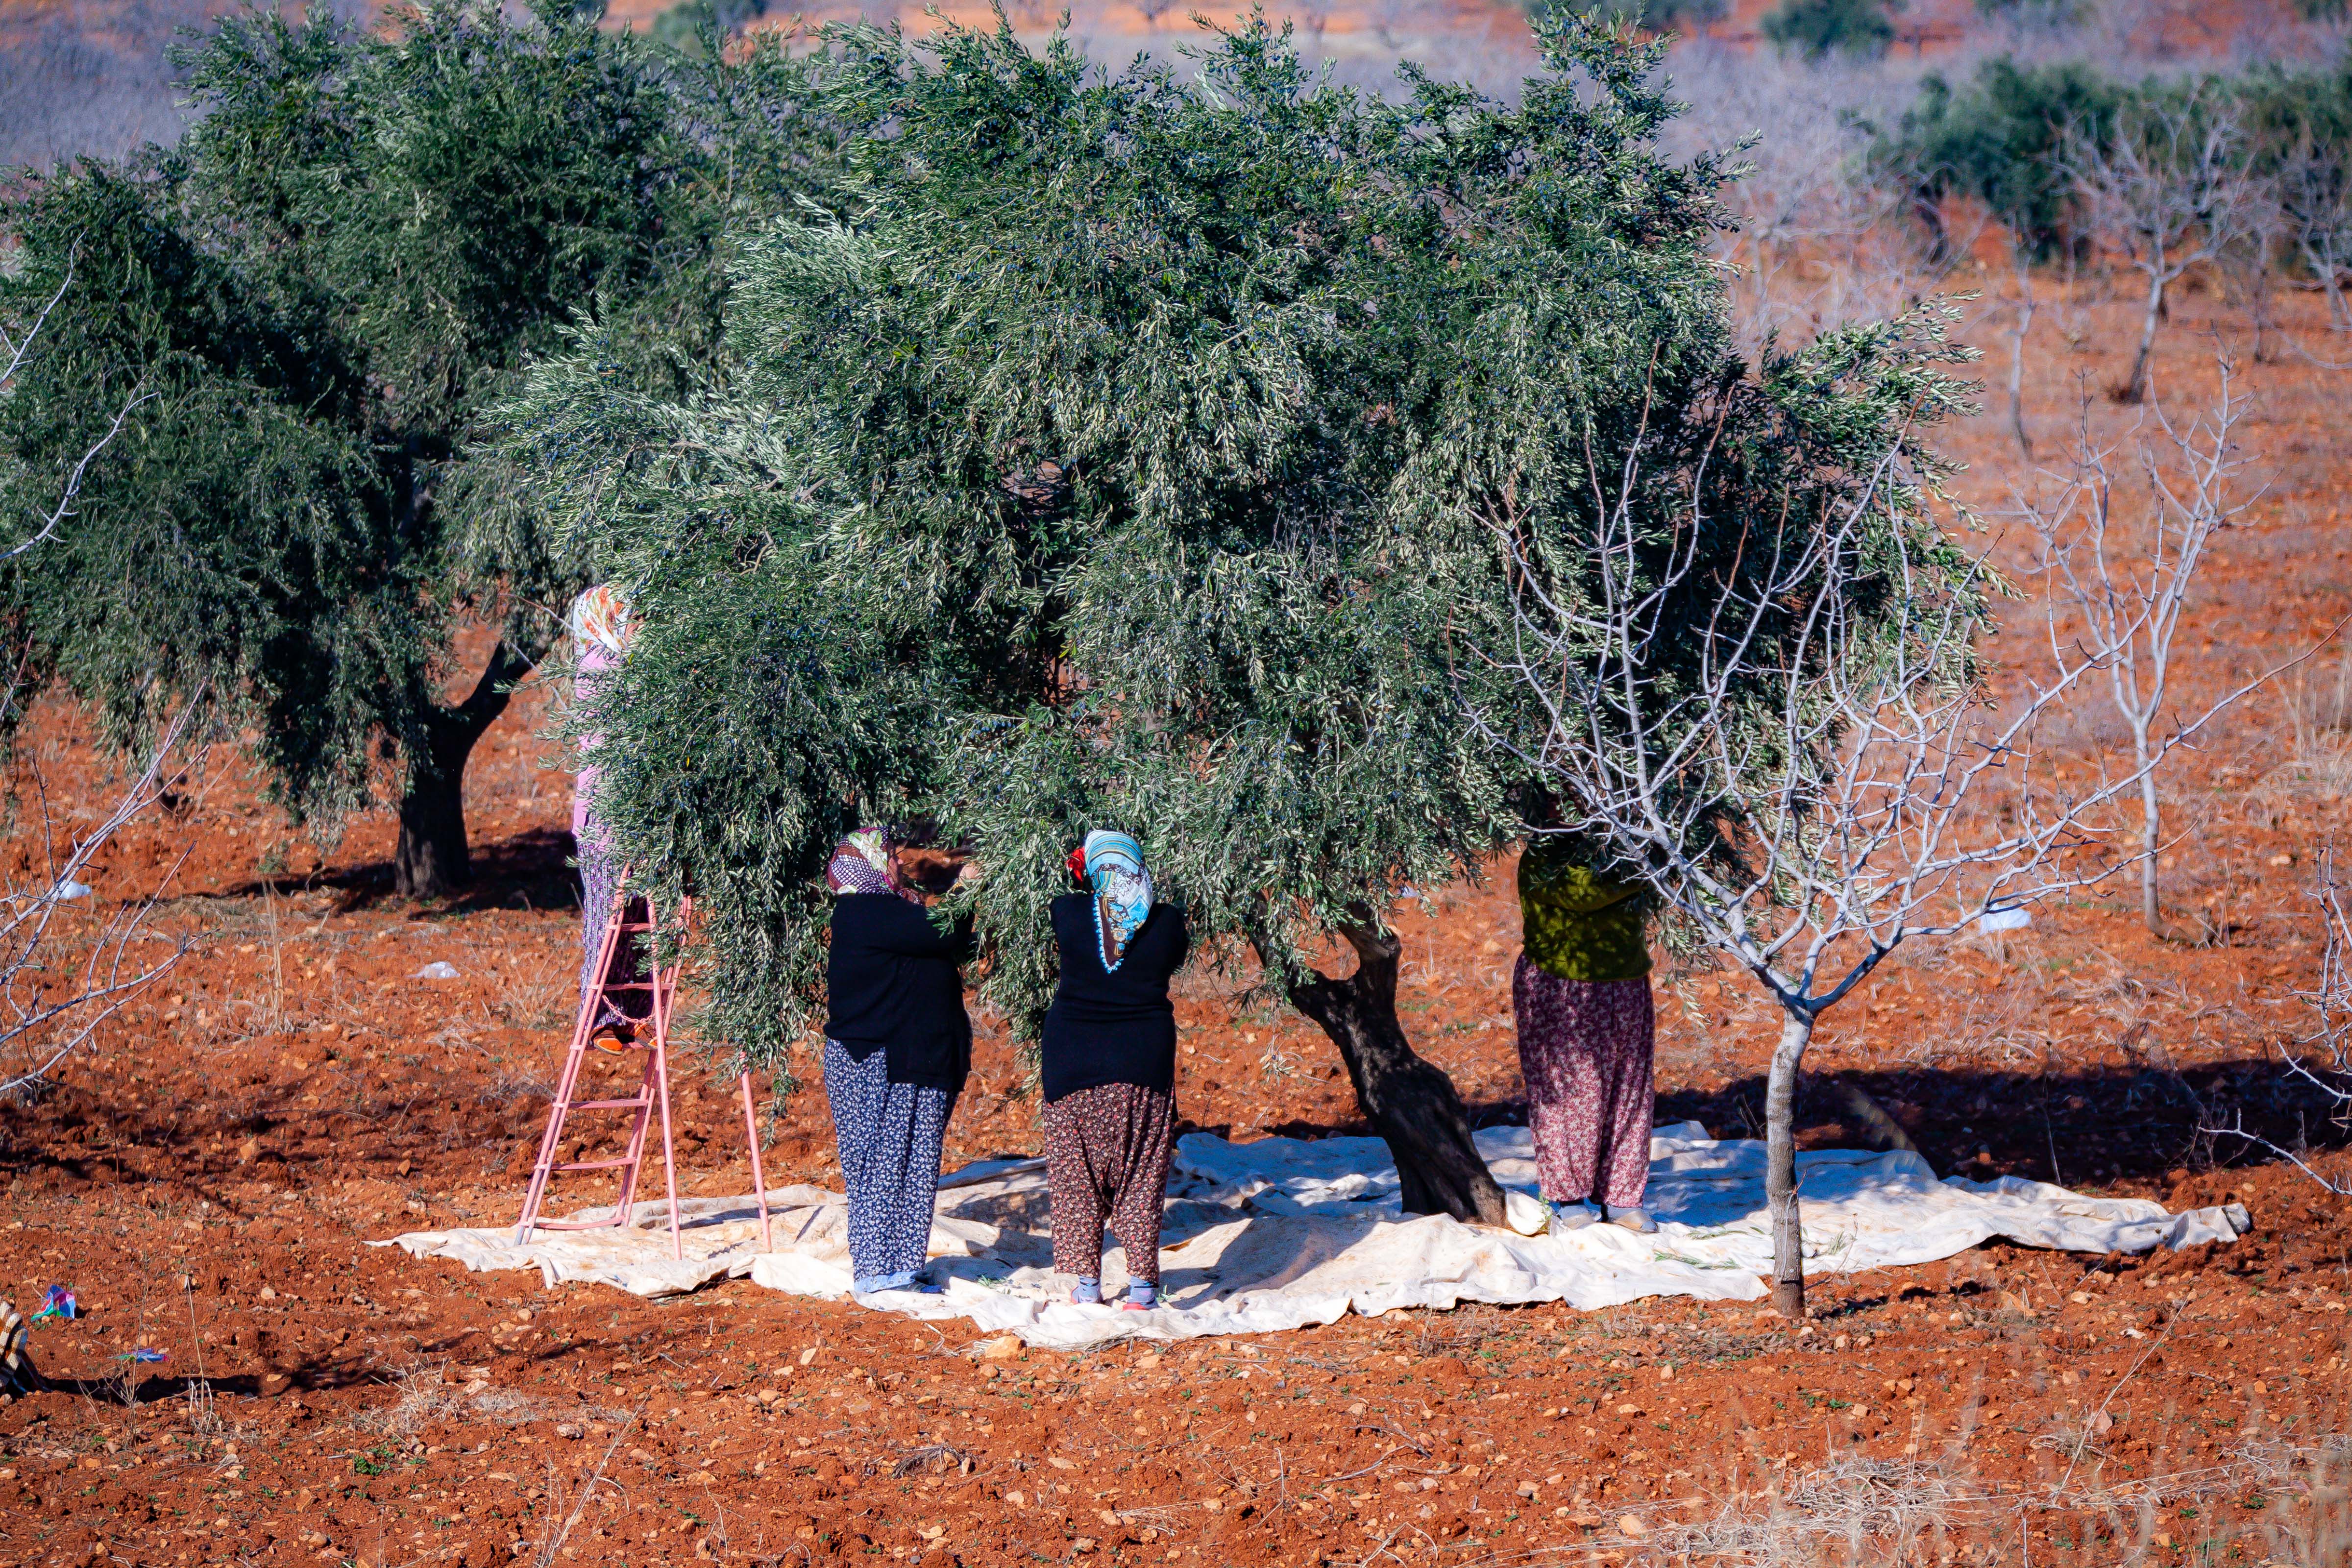 Turkey, Gaziantep Prov, Picking Olives, 2009, IMG 1535